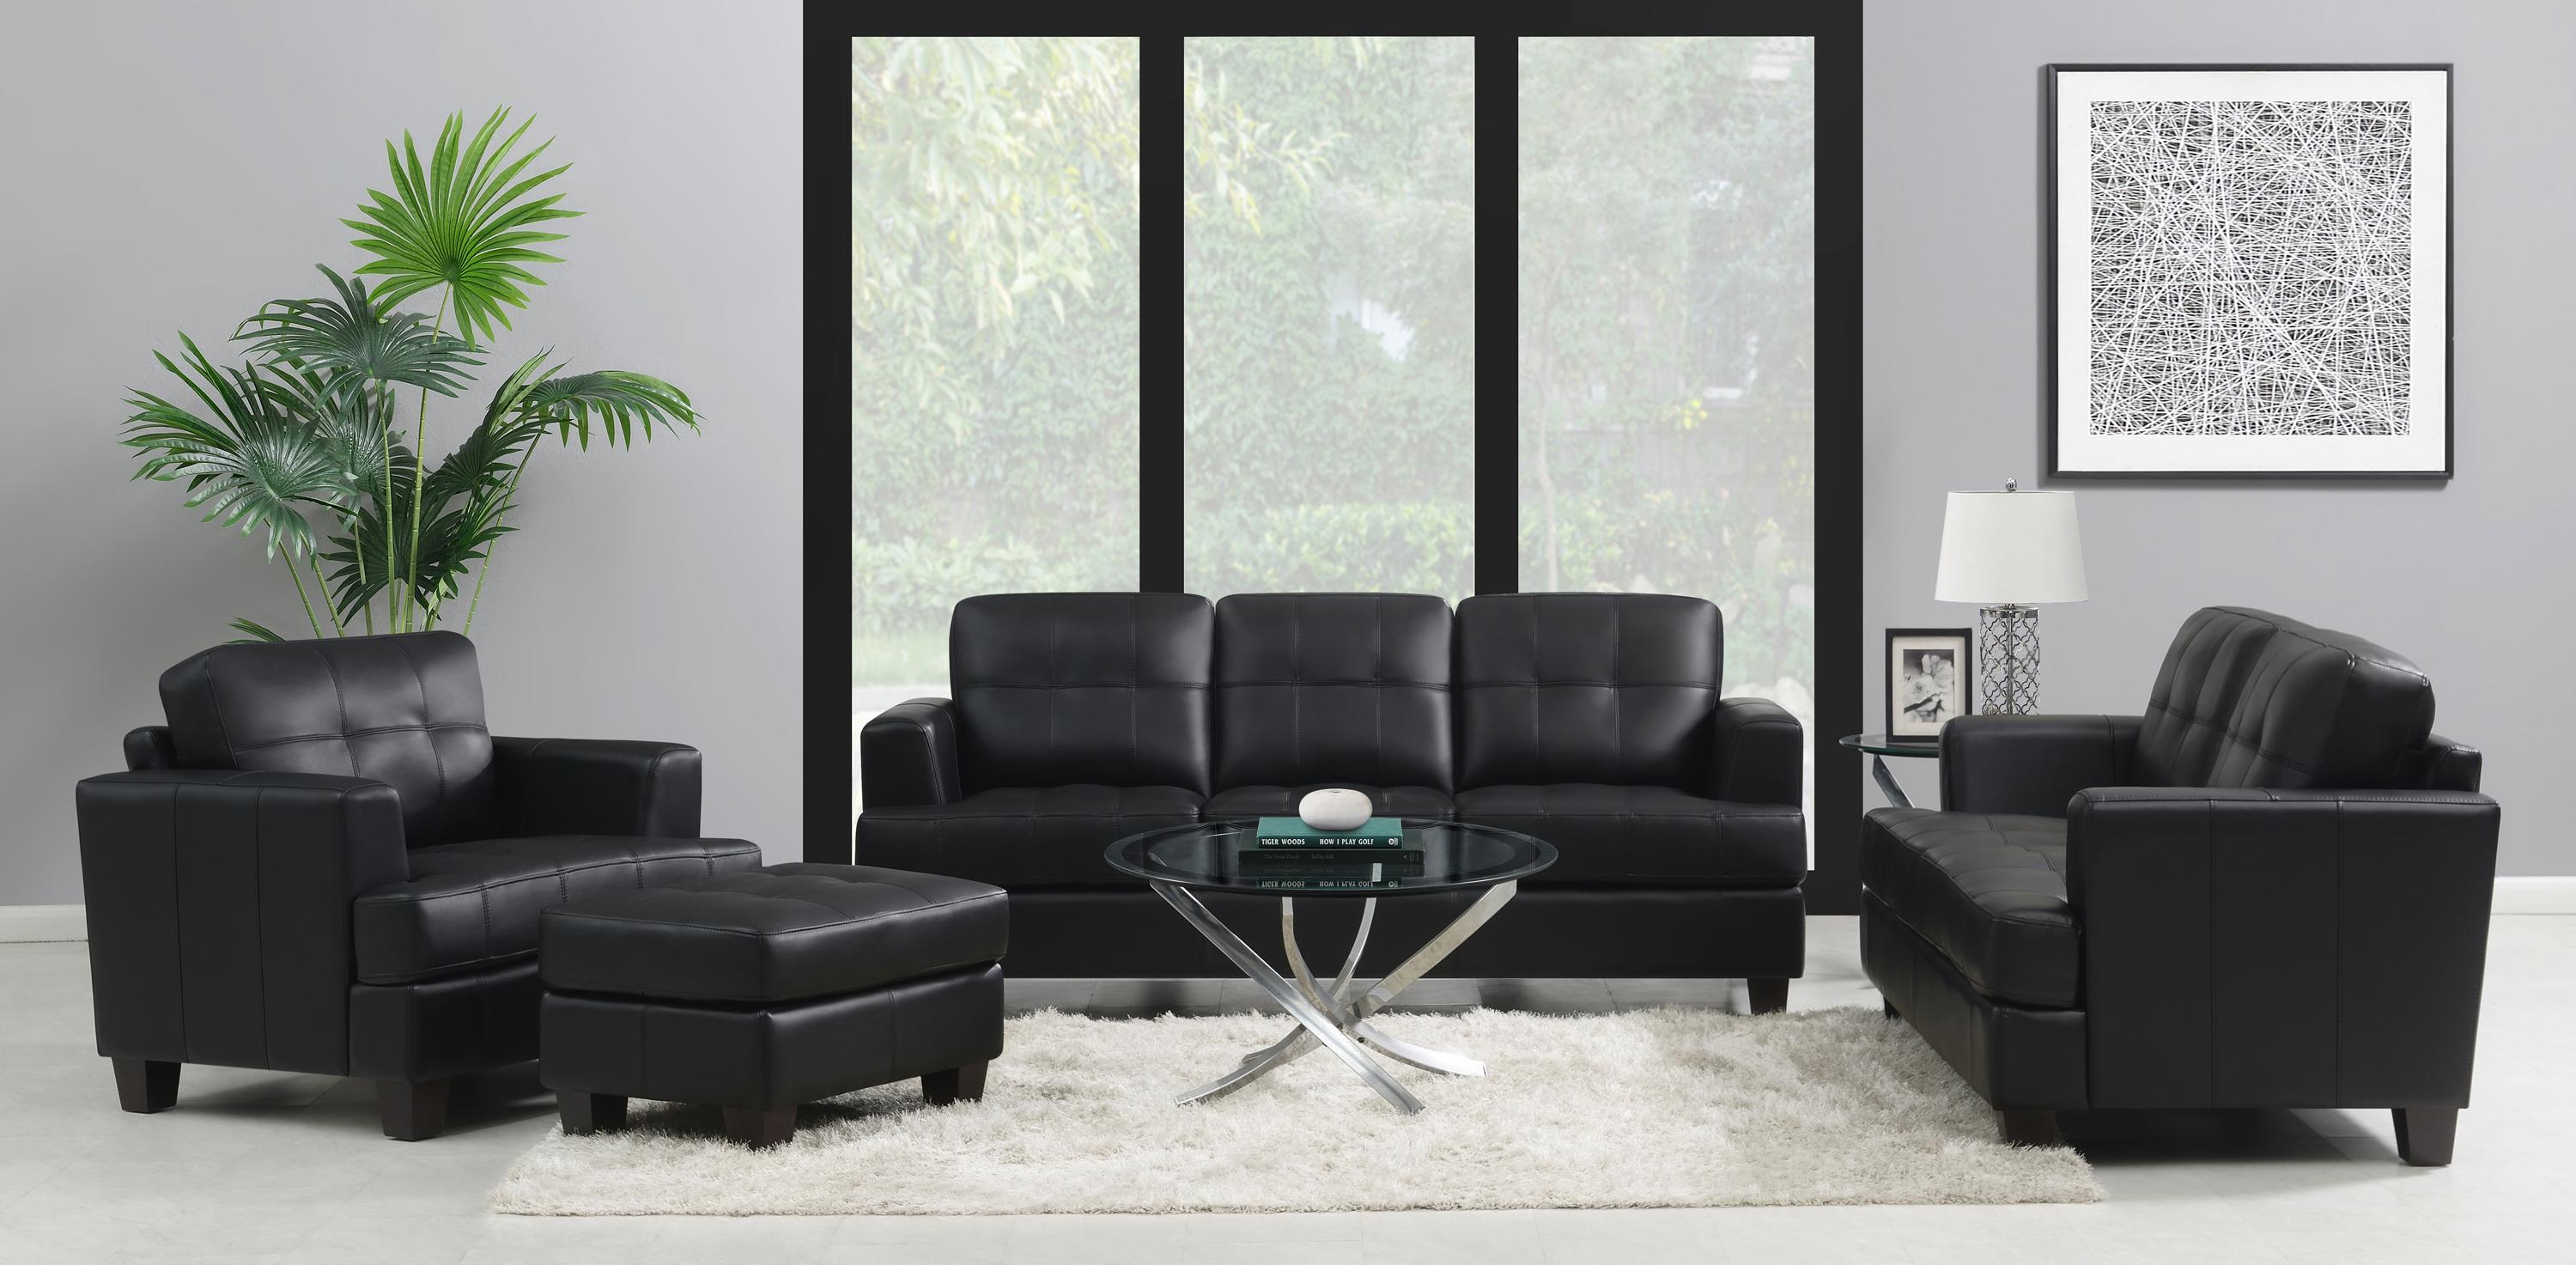 Transitional Living Room Set 501681-S4 Samuel 501681-S4 in Black Leatherette